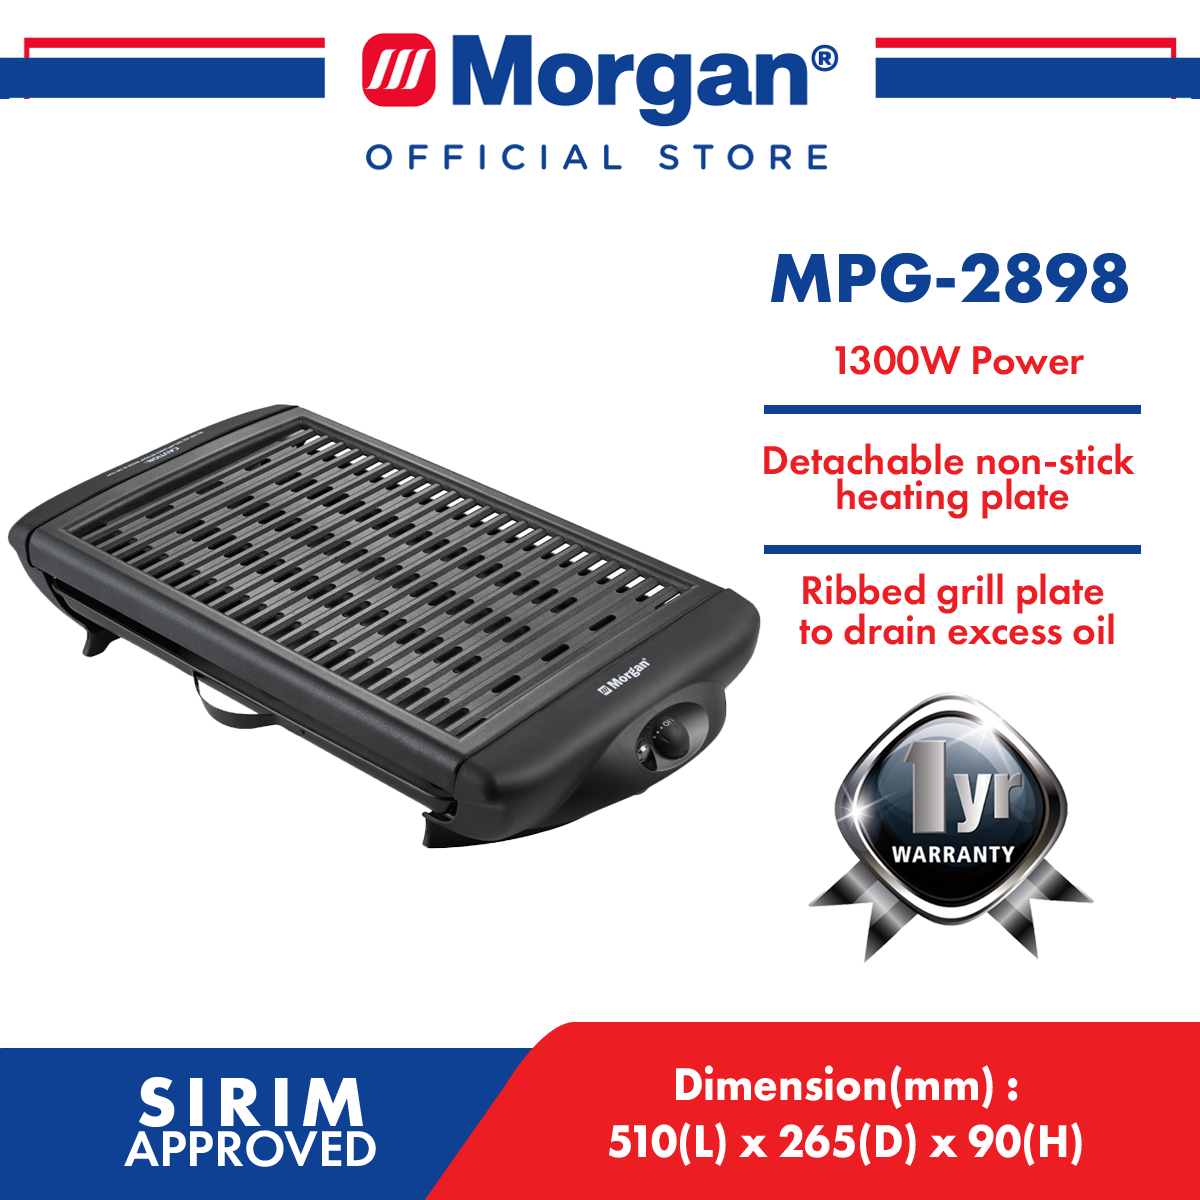 MORGAN MPG-2898 PAN GRILL NON-STILCK COATED